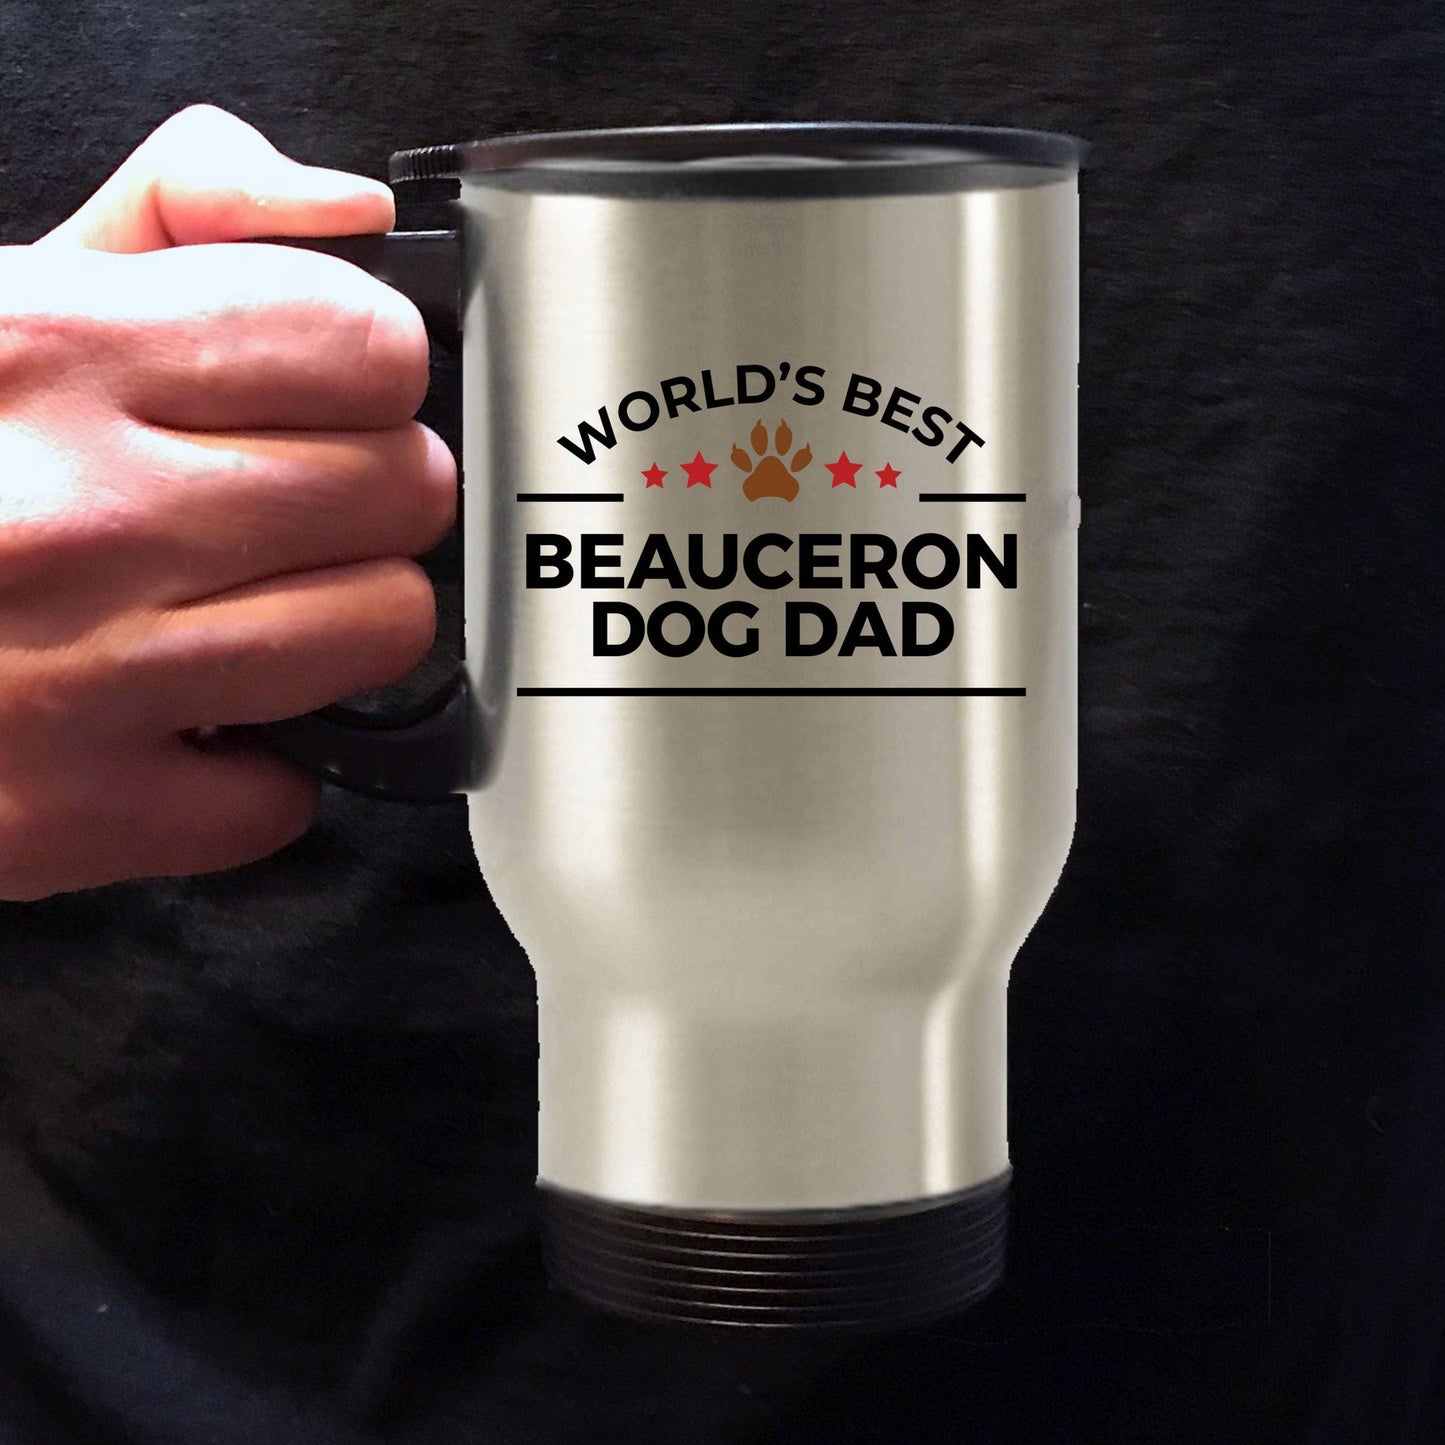 Beauceron Dog Dad Travel Coffee Mug